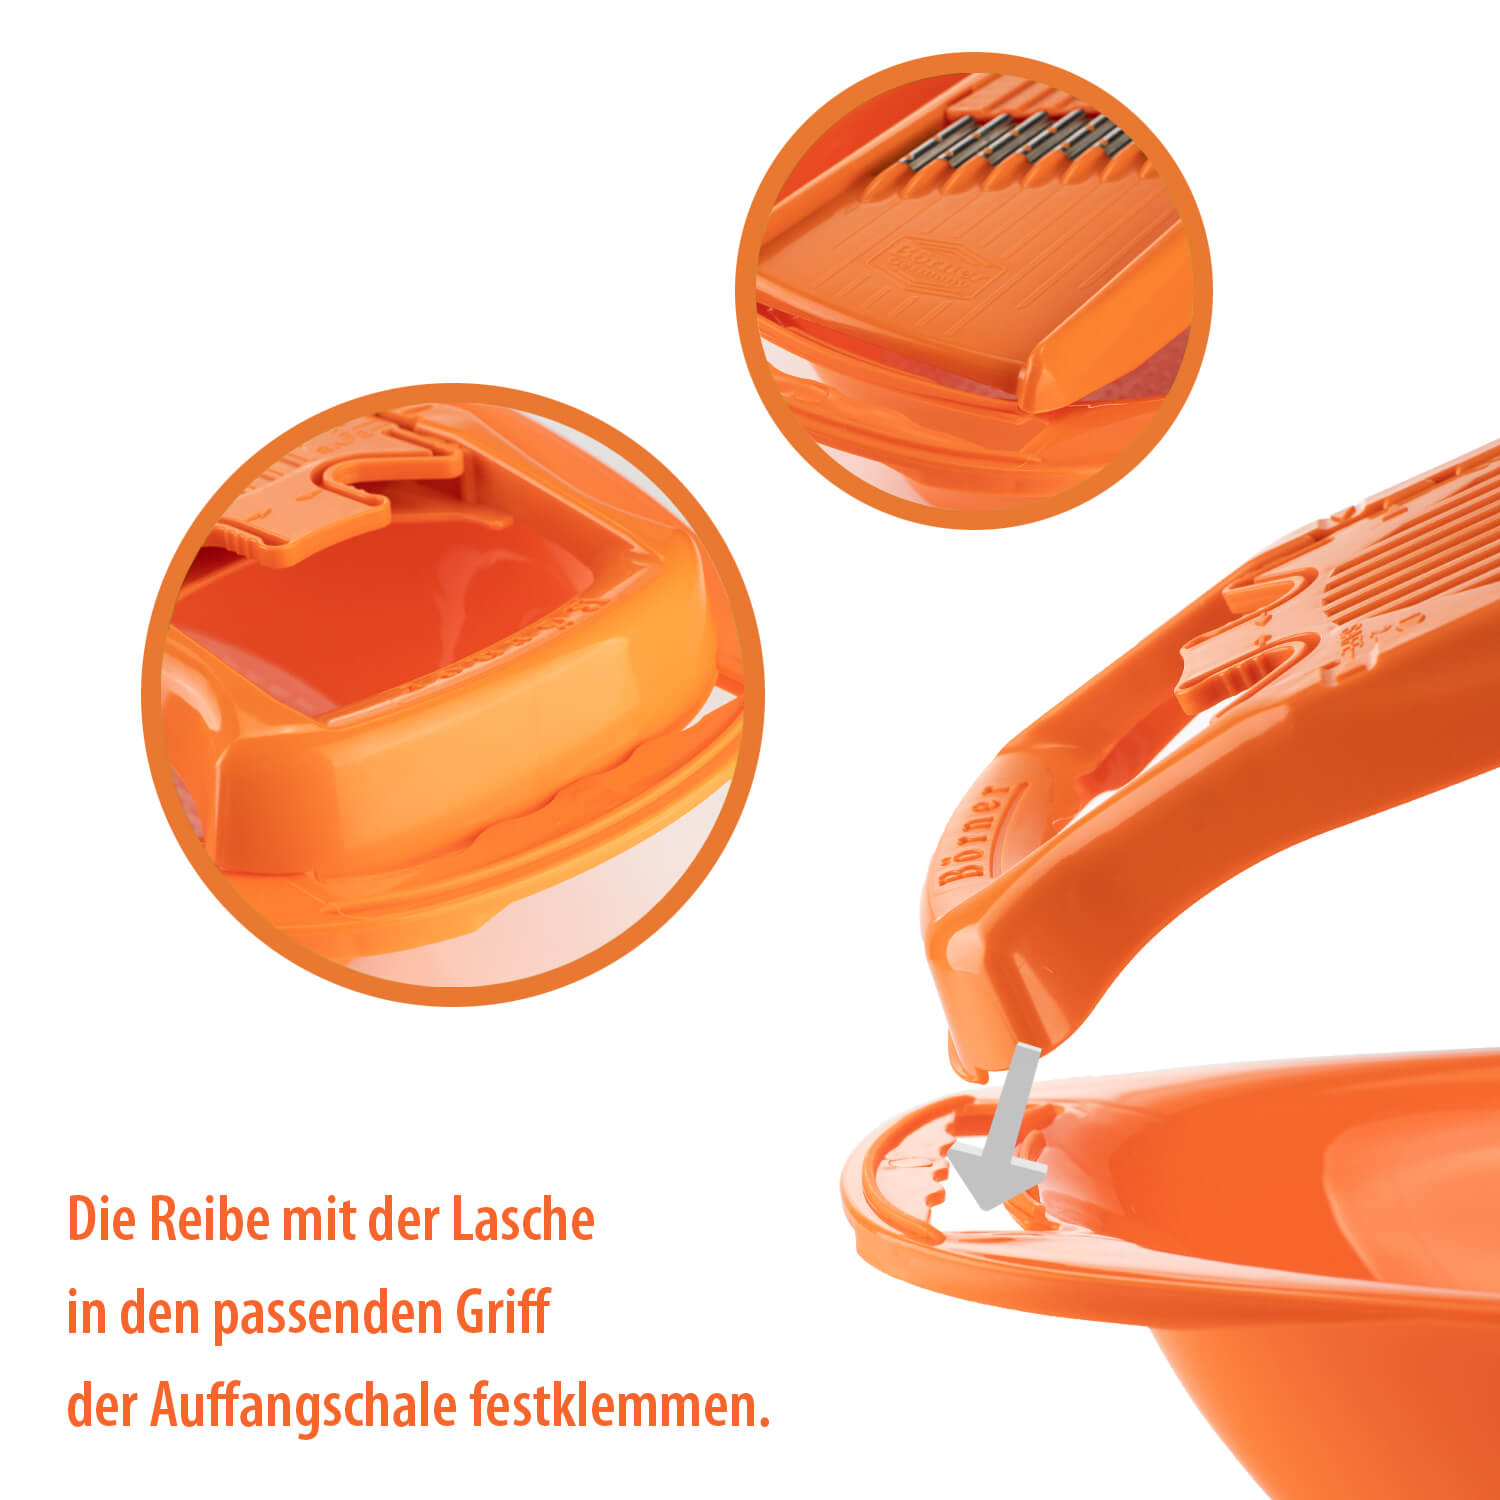 Овална ваничка за ренде Бьорнер V5 - Оранжев